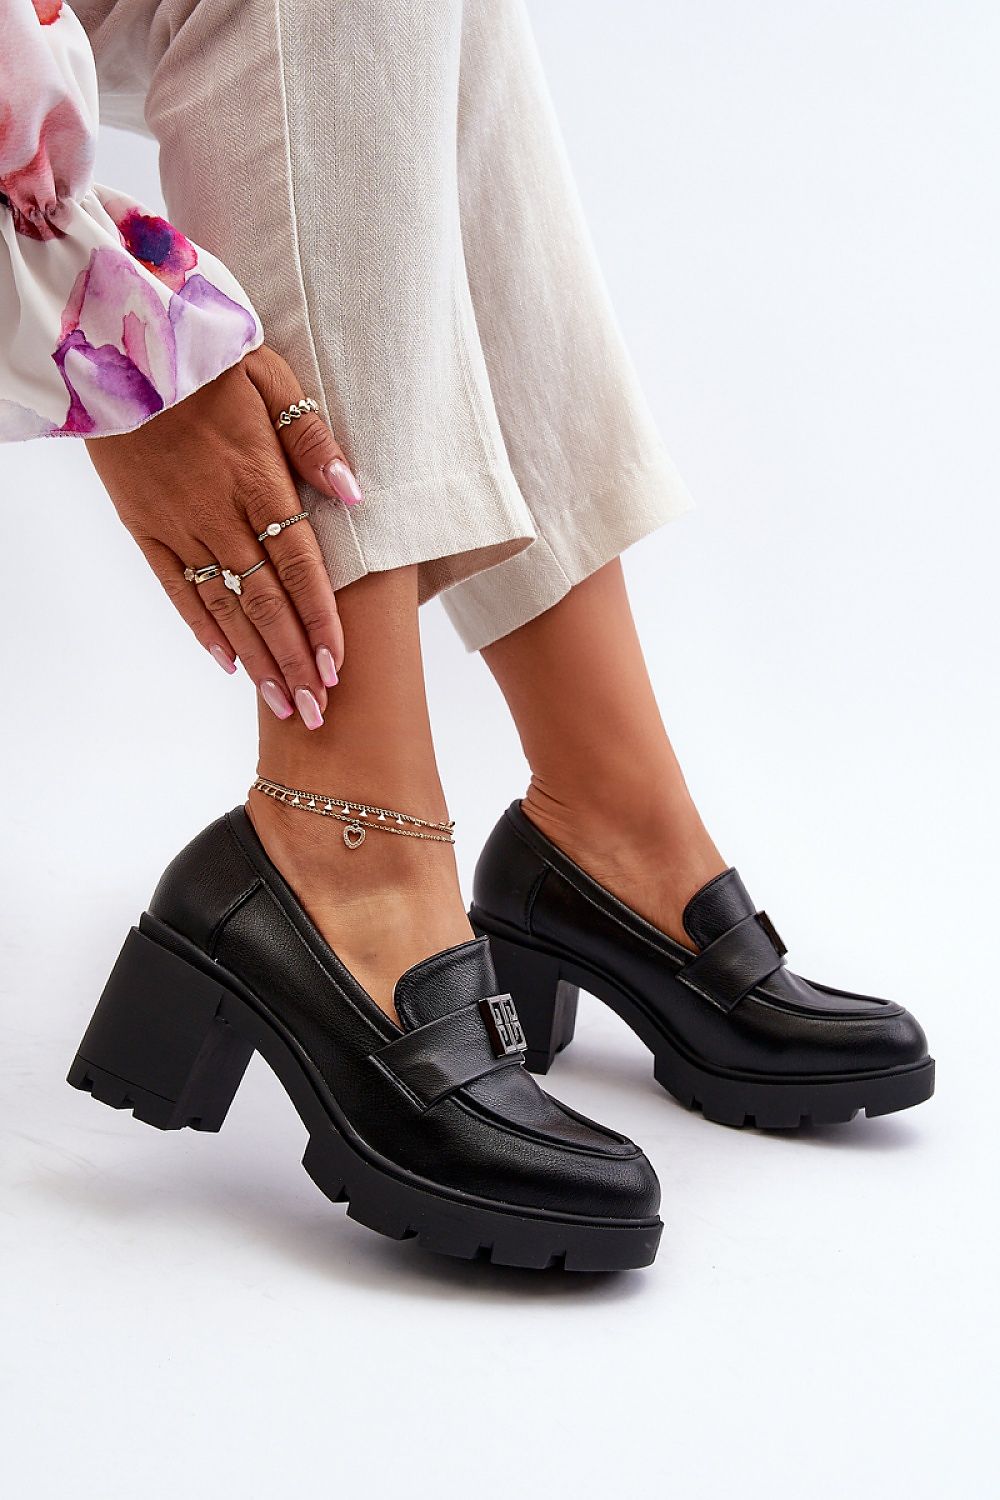 Elegance Comfort Women's Semi-Boots - Venus Trendy Fashion Online